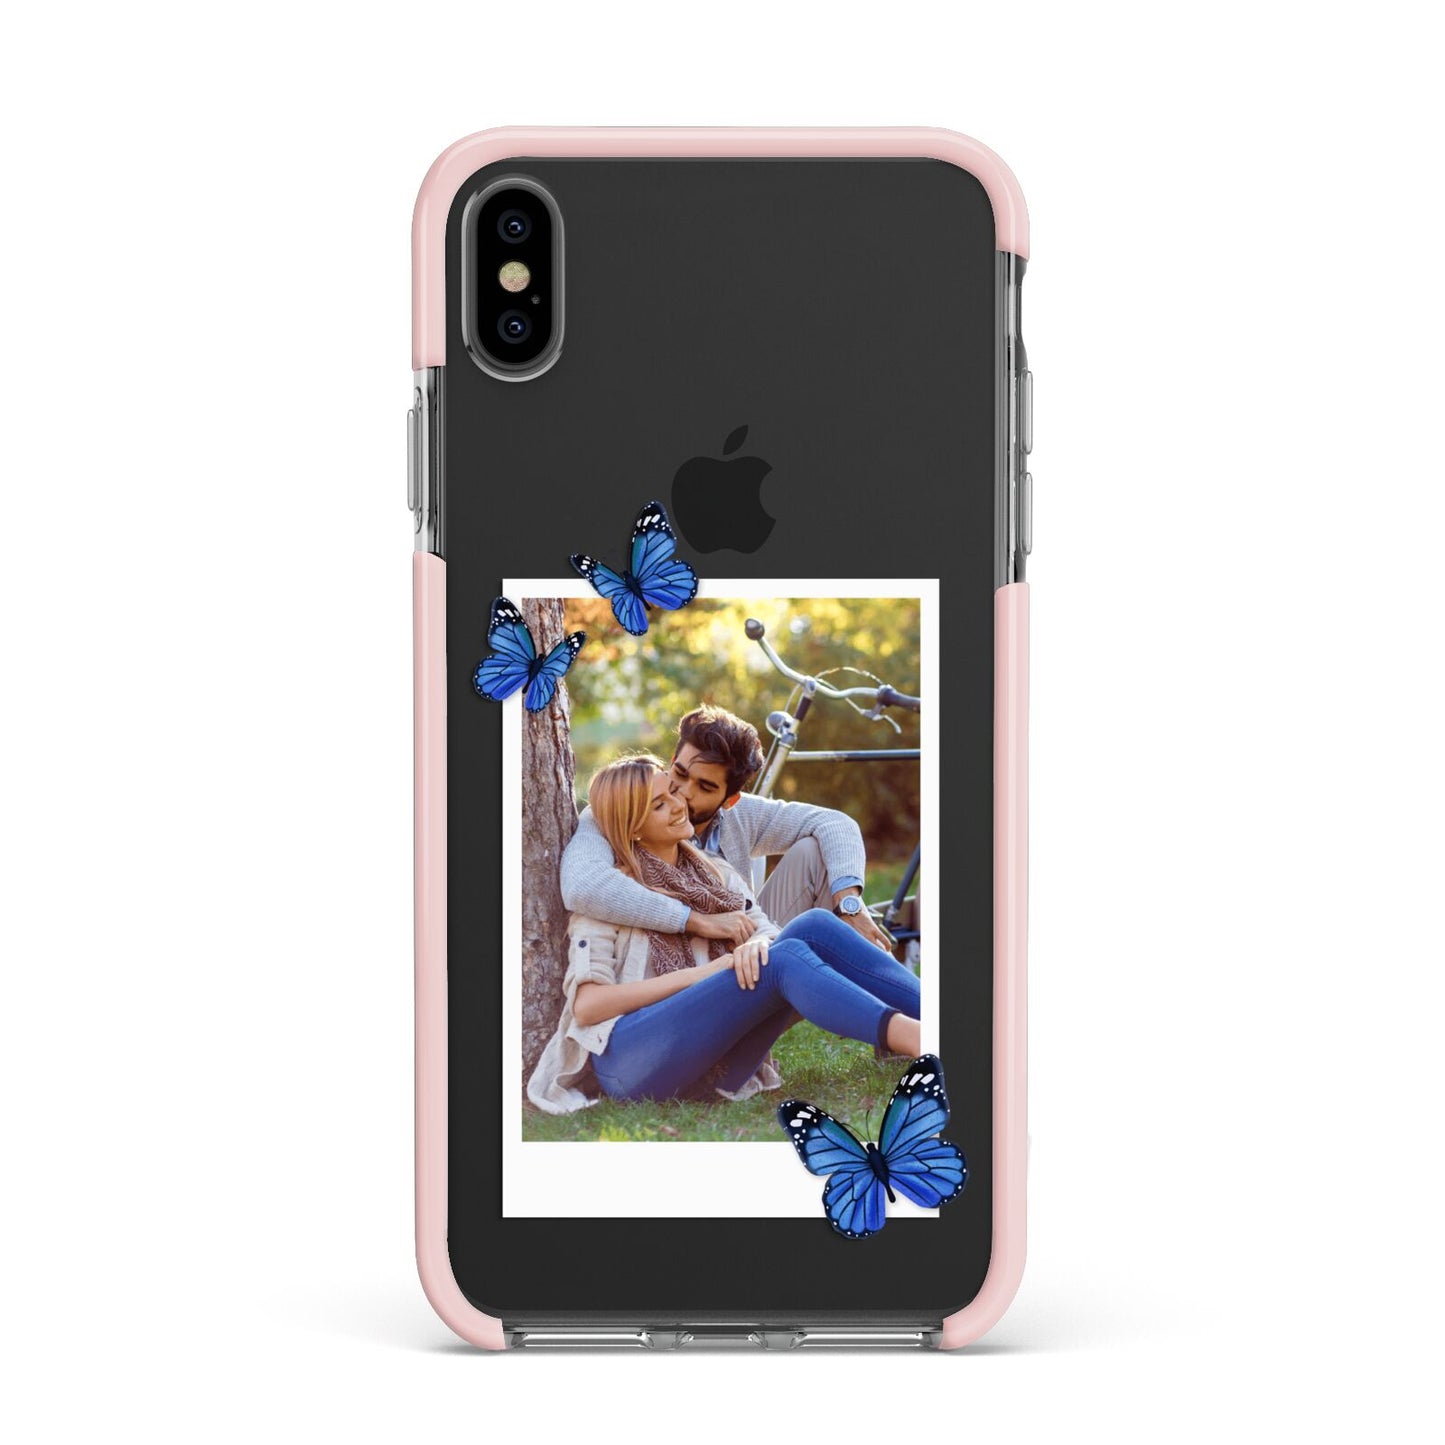 Polaroid Photo Apple iPhone Xs Max Impact Case Pink Edge on Black Phone